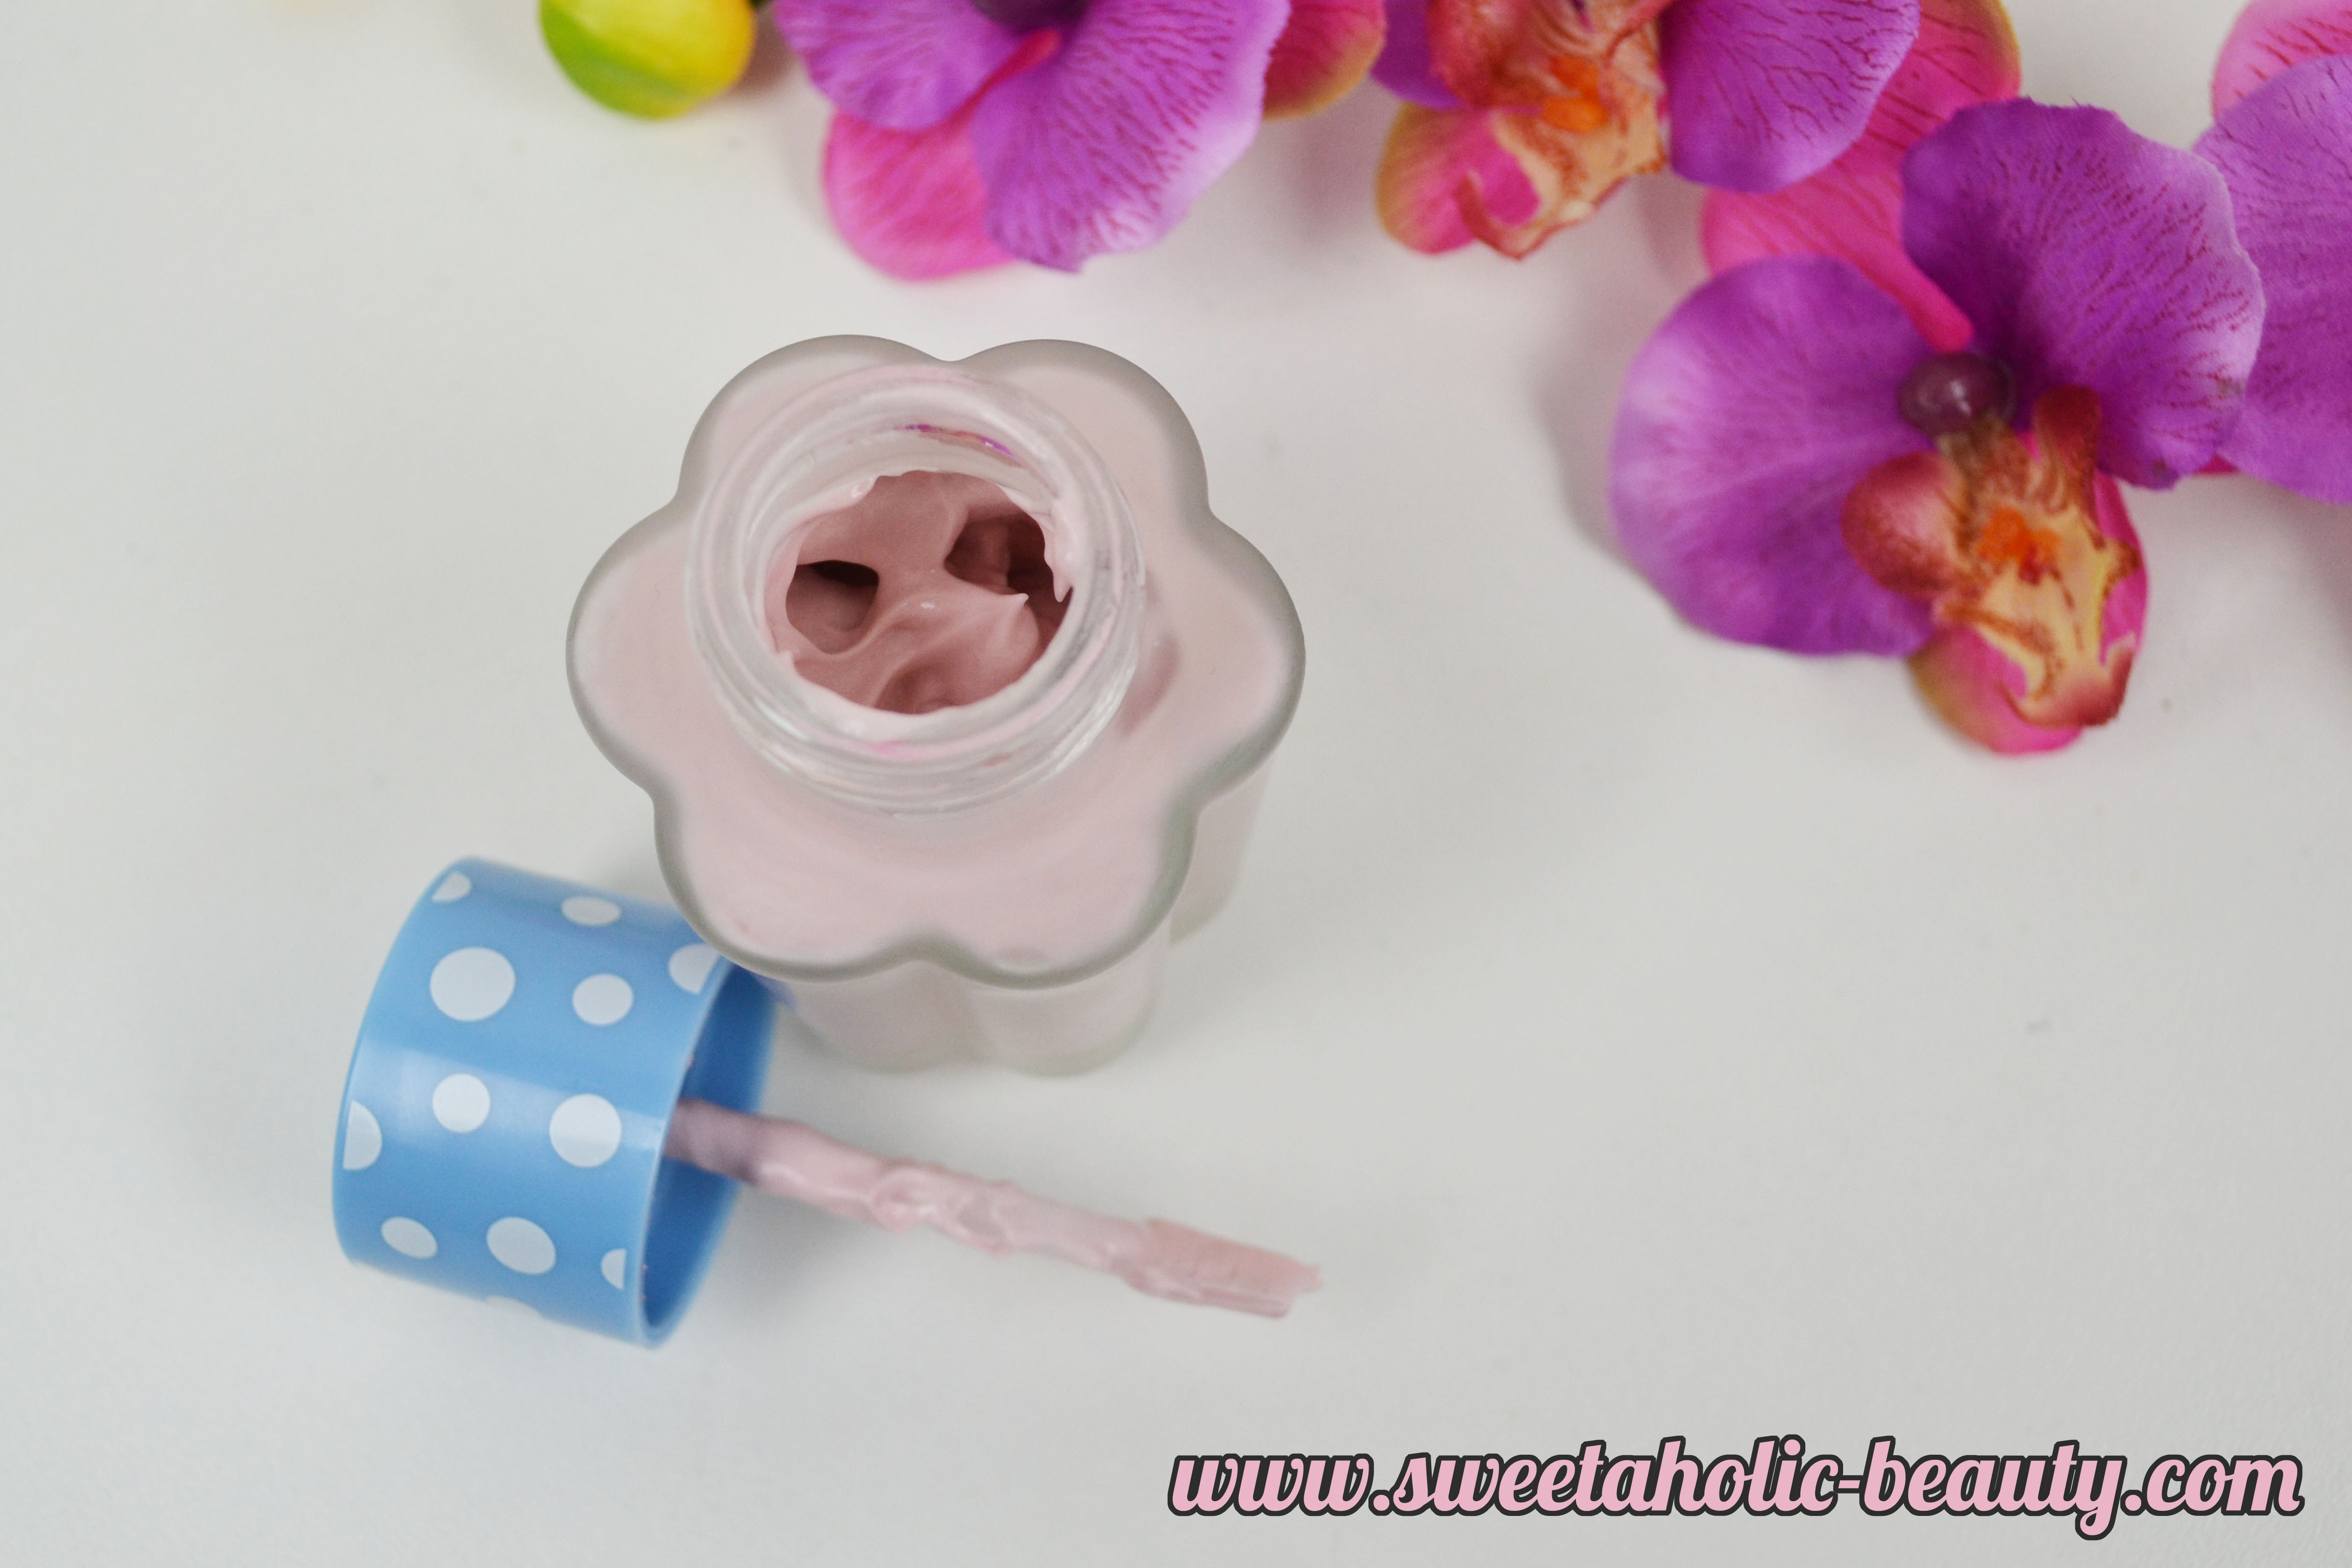 Holika Holika Aqua Petit Jelly Starter Review - Sweetaholic Beauty